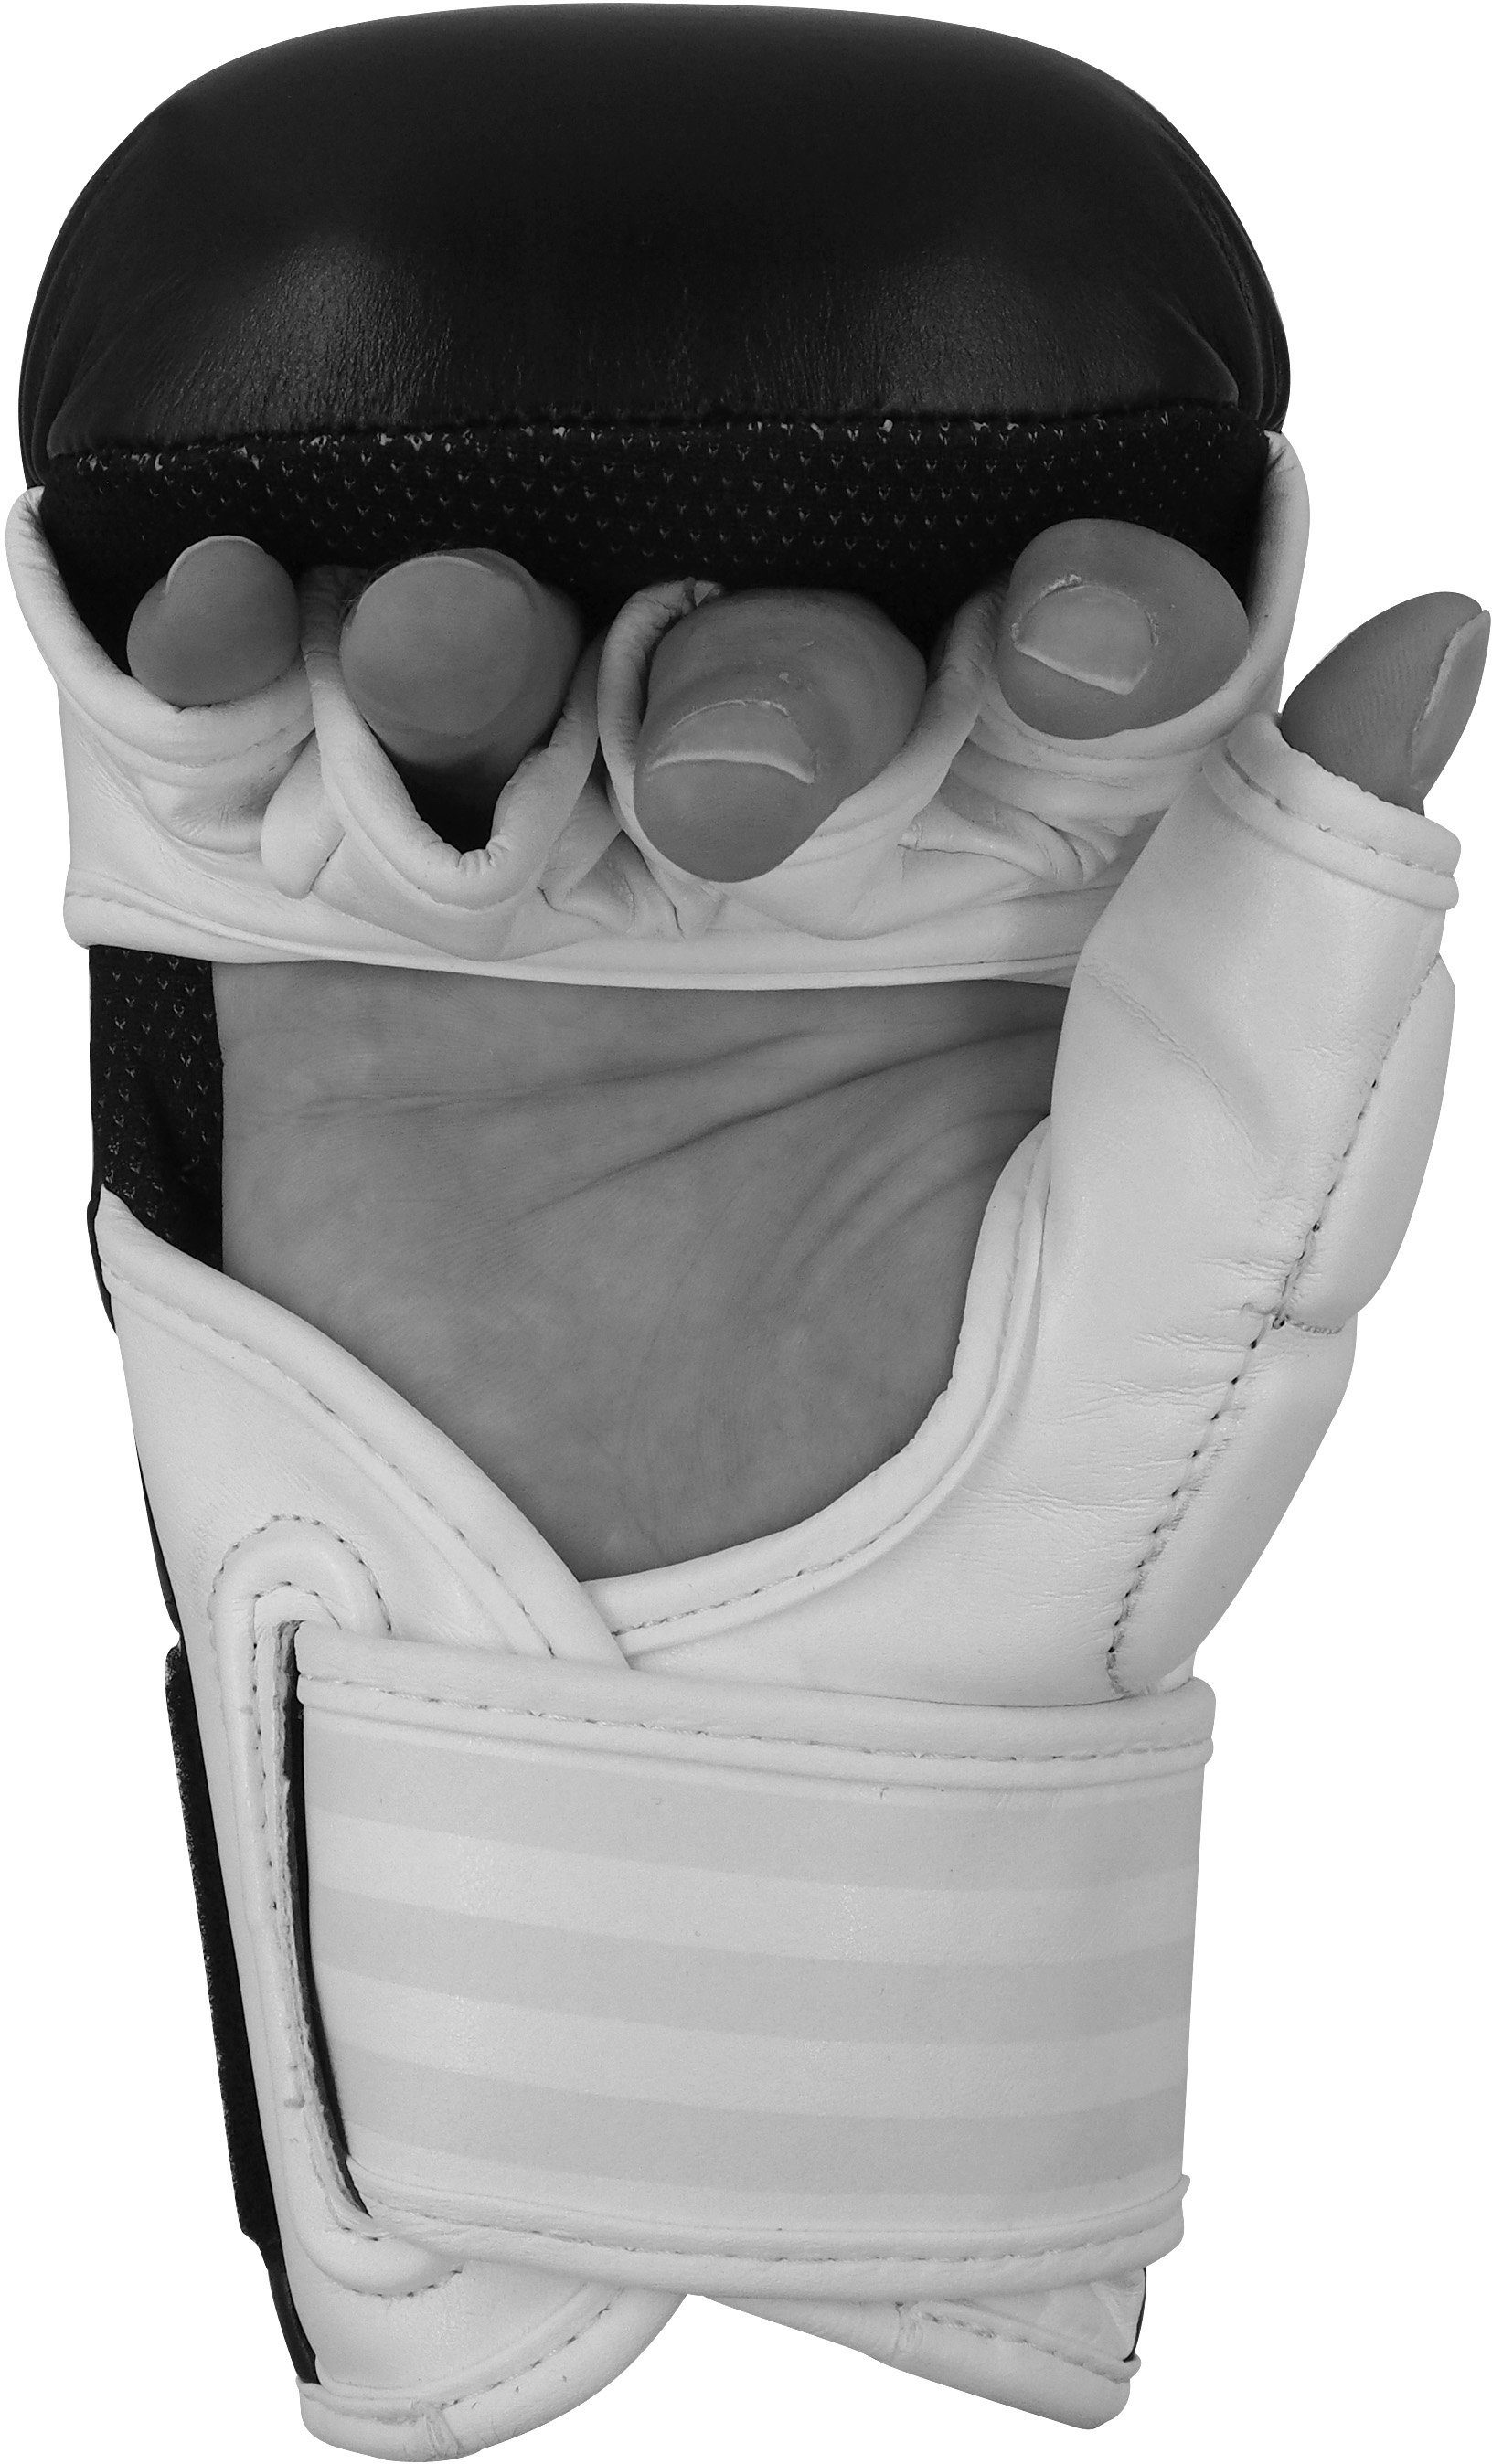 adidas Performance MMA-Handschuhe Training Cloves Grappling